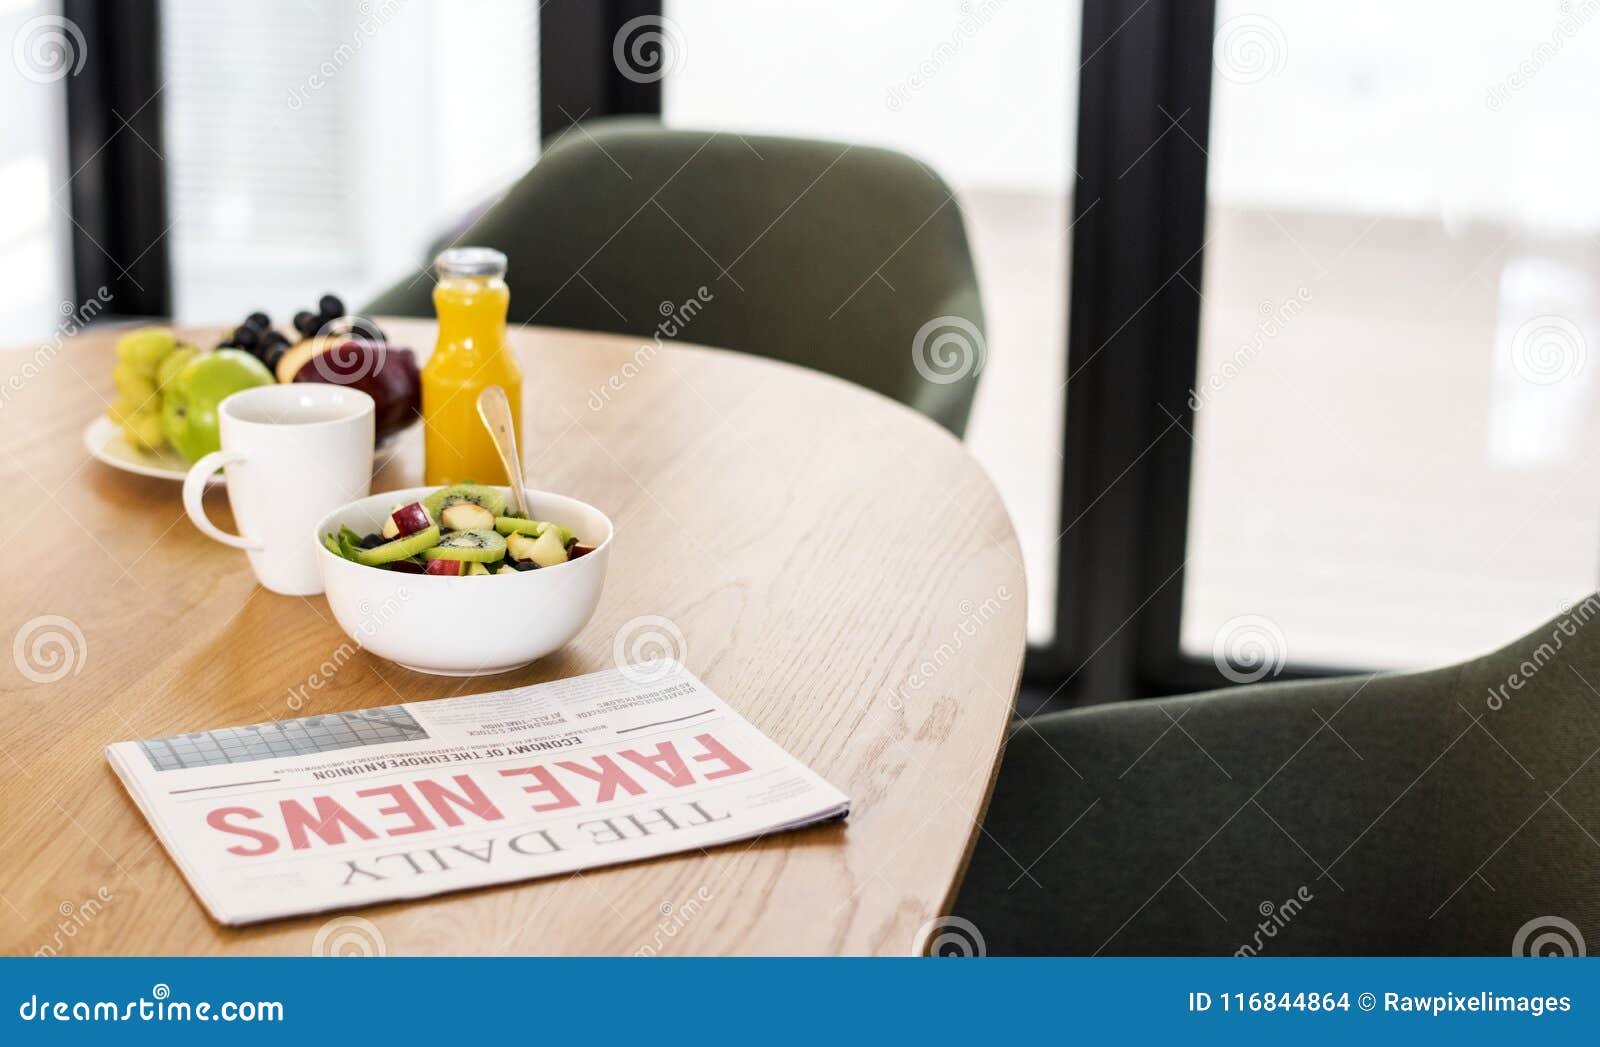 Healthy Breakfast In Meeting Room Stock Photo - Image of ...